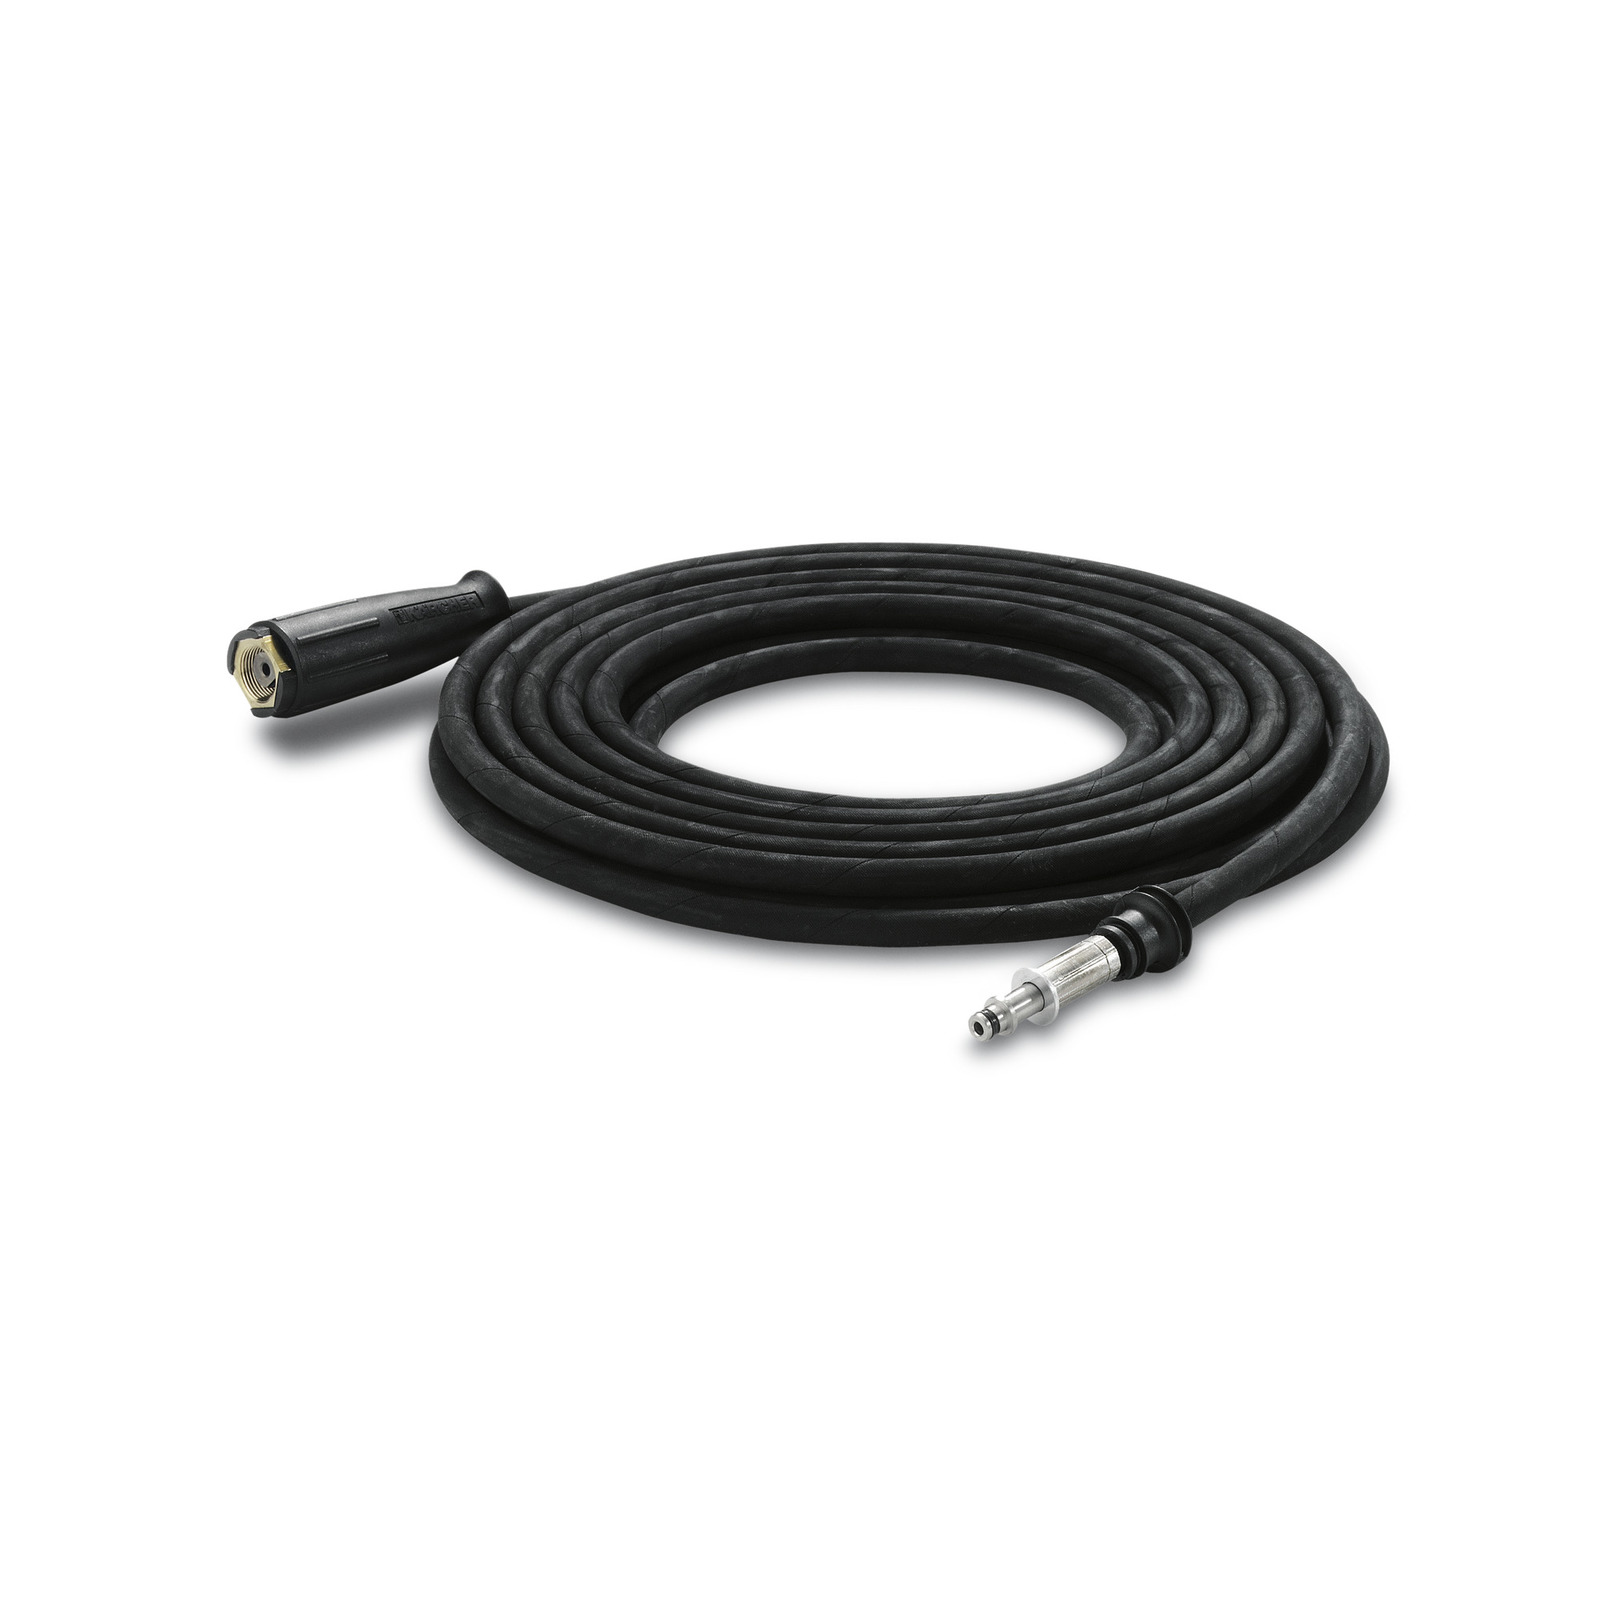 High-pressure hose, 10 m, 250 bar, 1x M22x1,5 / 1x AVS-hose reel connection – Өндөр даралтын хоолой